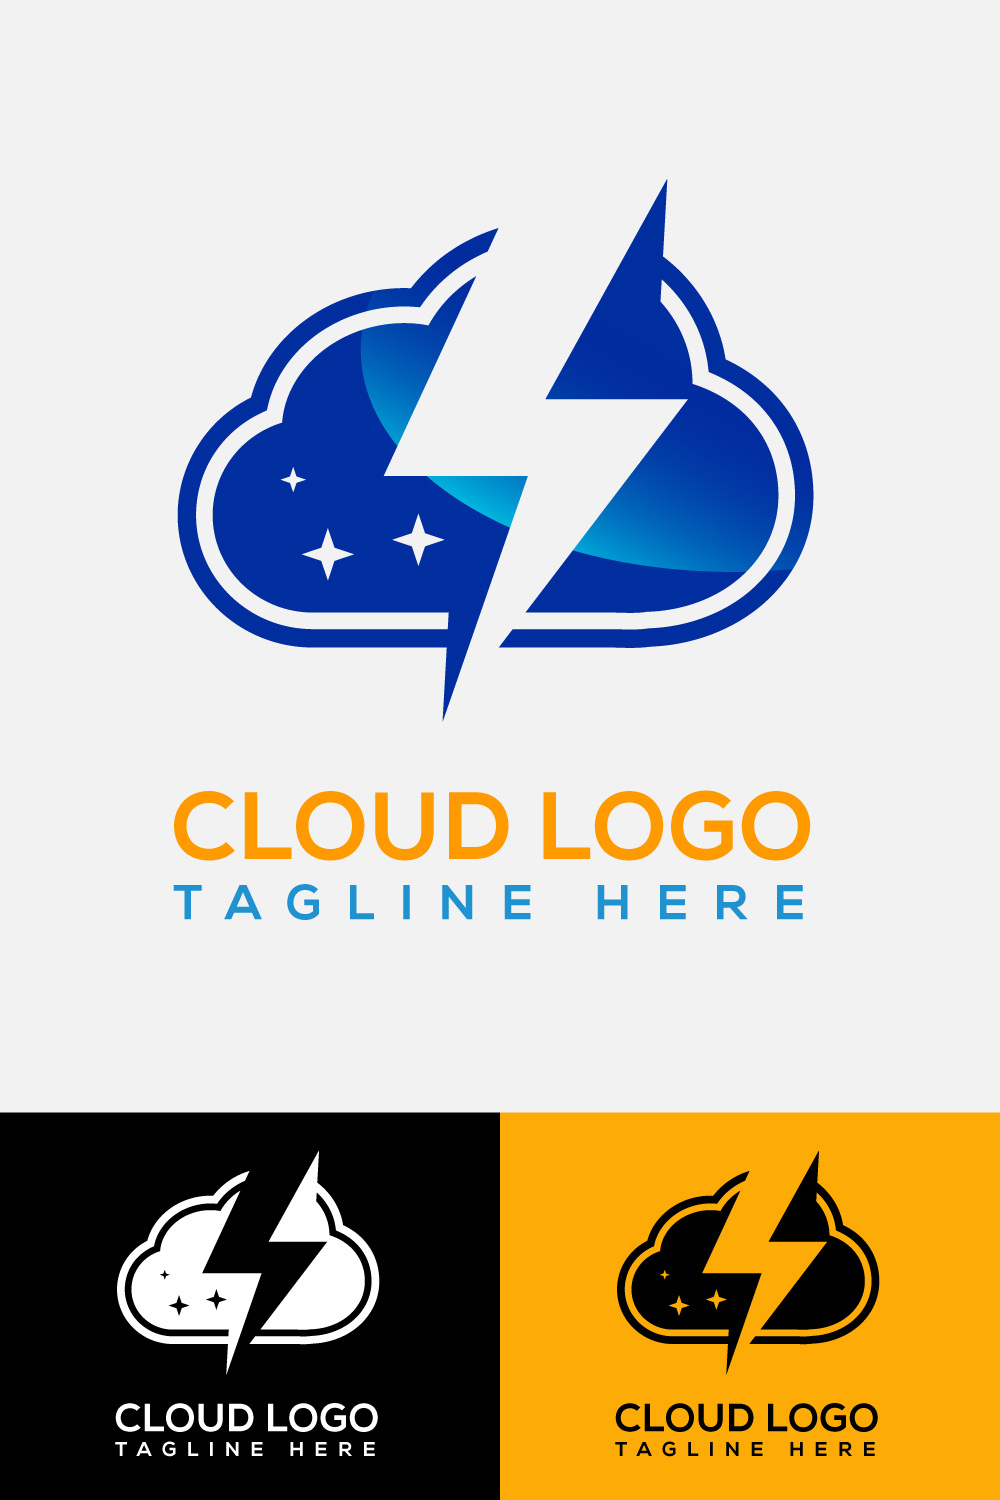 Cloud Provider Service Logo Design pinterest image.